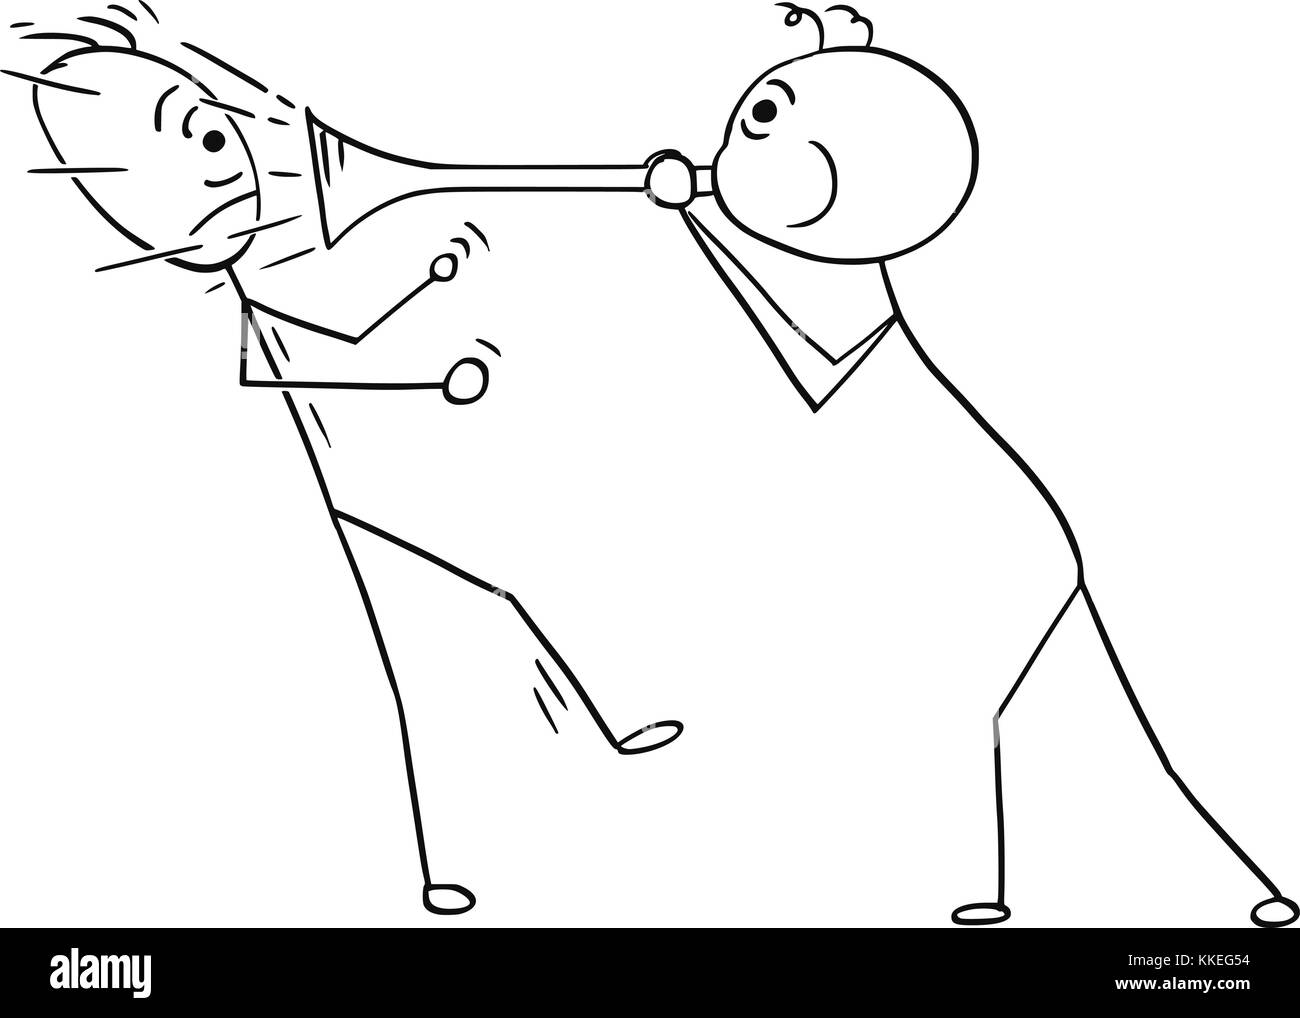 Cartoon Vektor der Mann spielt Horn vuvuzela Ton gegen einen anderen Mann. Stock Vektor